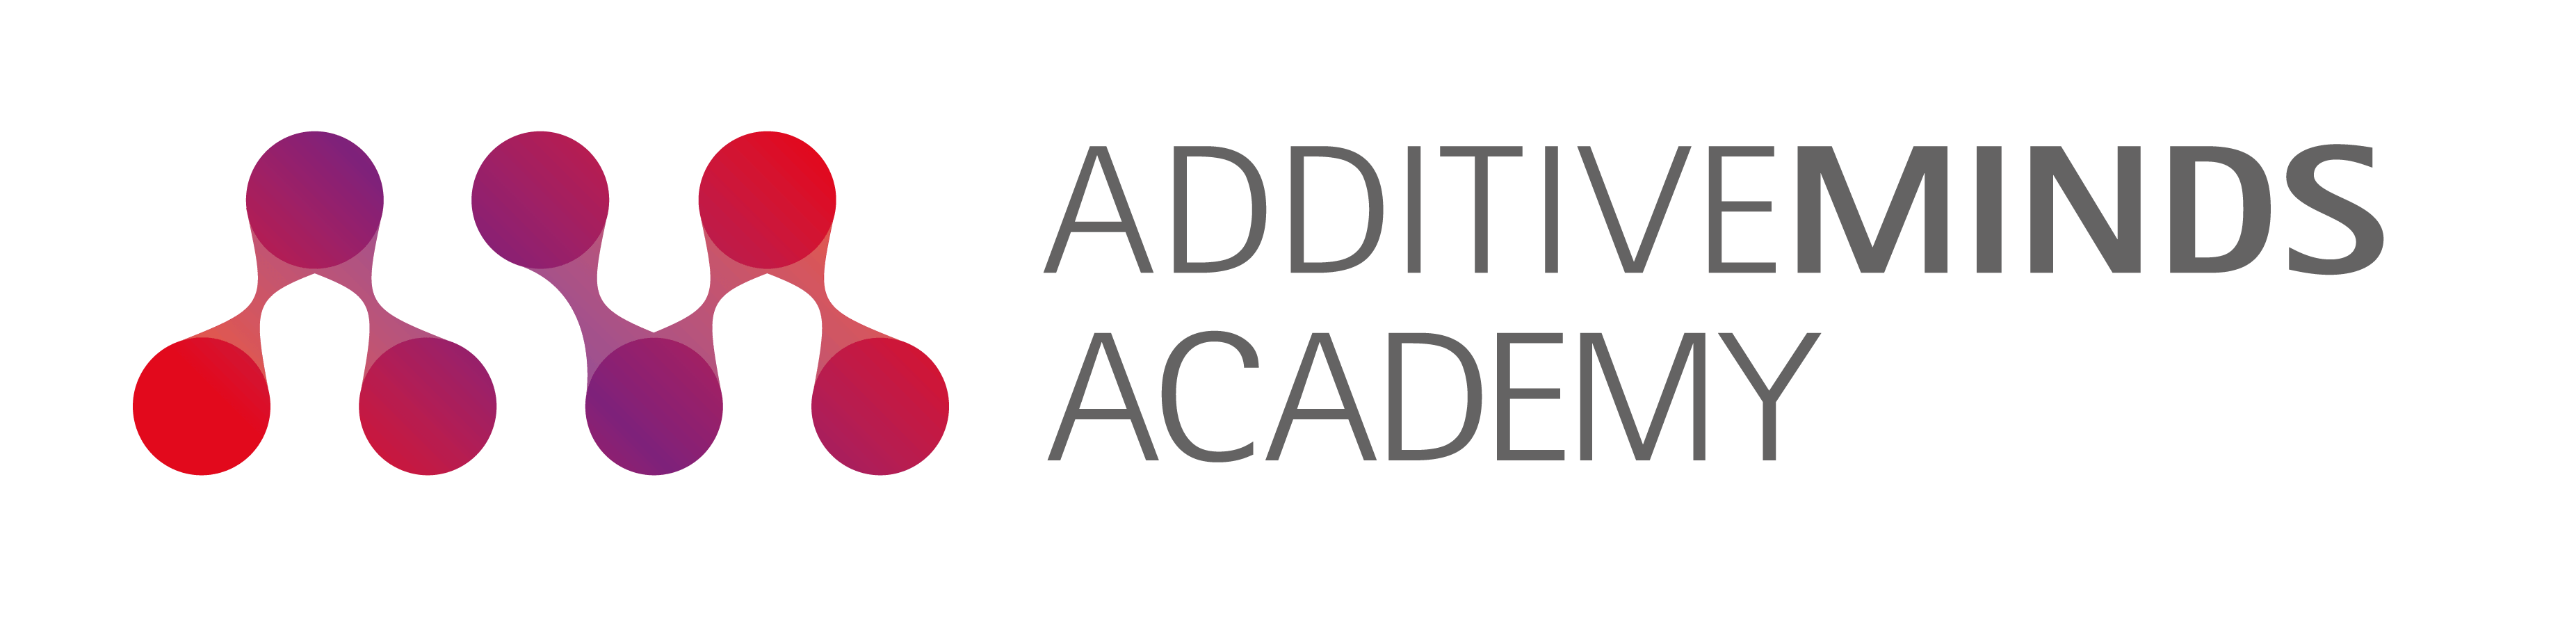 AdditiveMindsAcademy Logo April2021 color